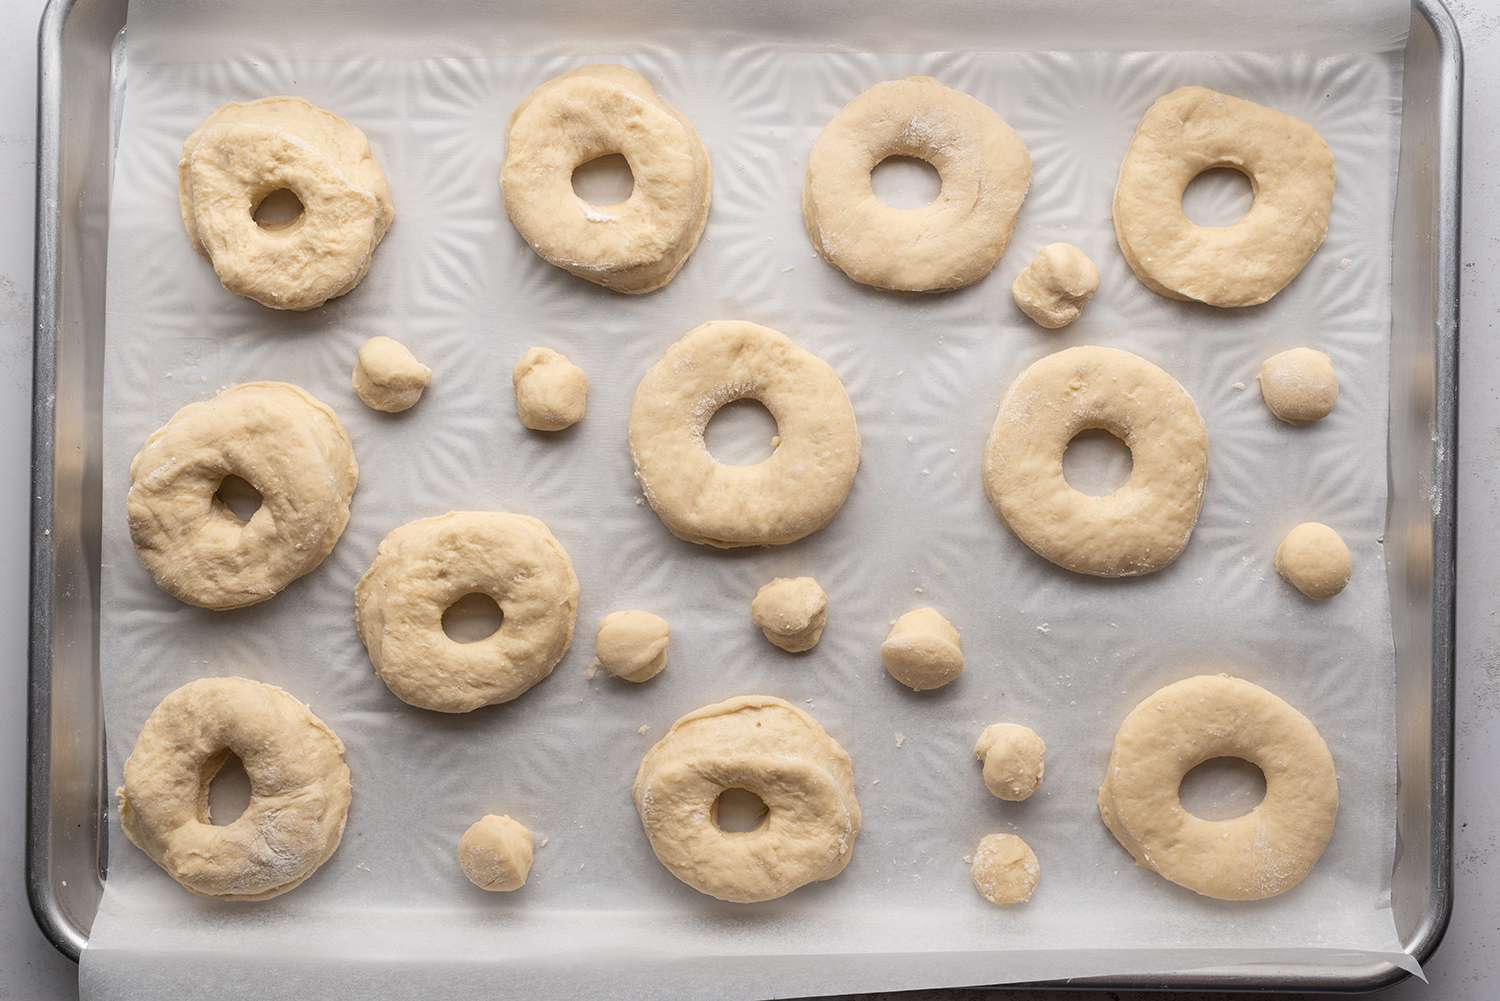 Doughnut dough shaped into doughnuts and doughnut holes on a prepared baking sheet